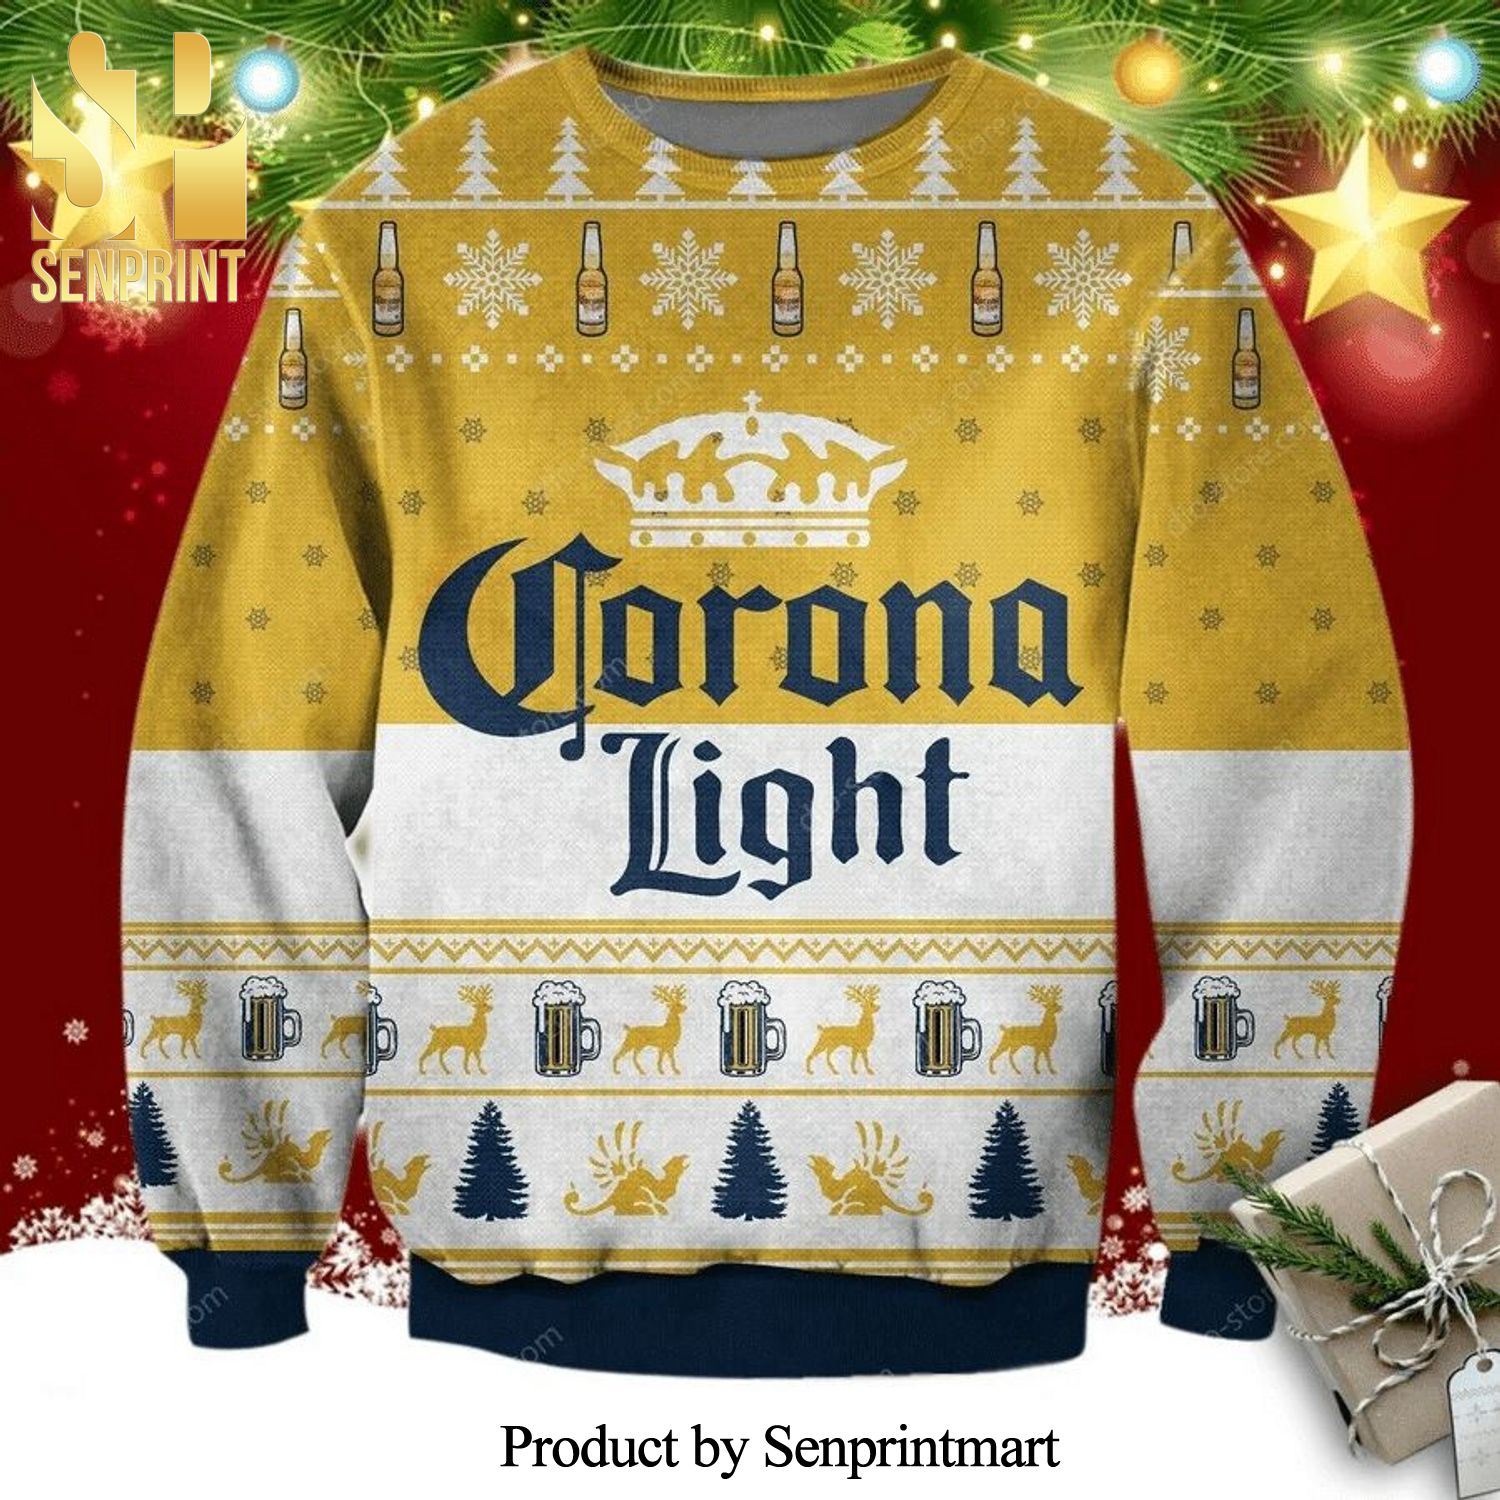 Corona Light Beer Logo Knitted Ugly Christmas Sweater